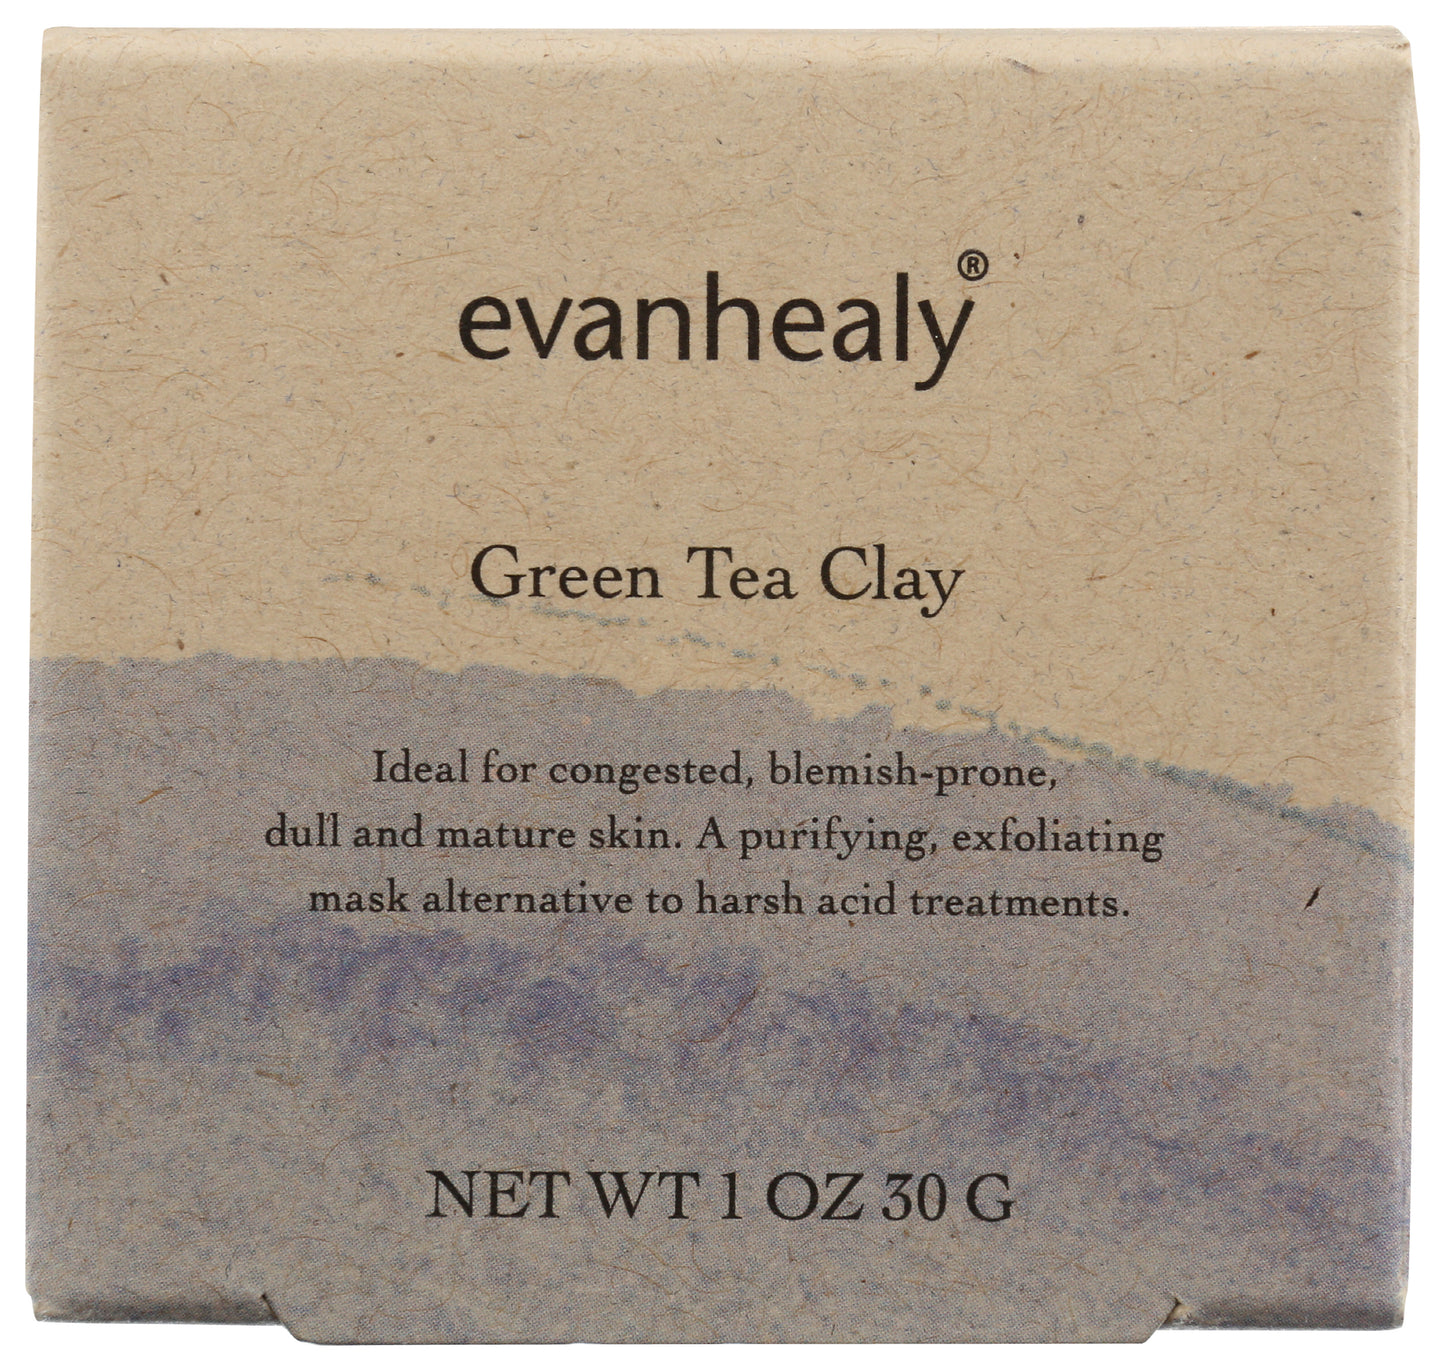 evanhealy Green Tea Clay 1 Oz. Front